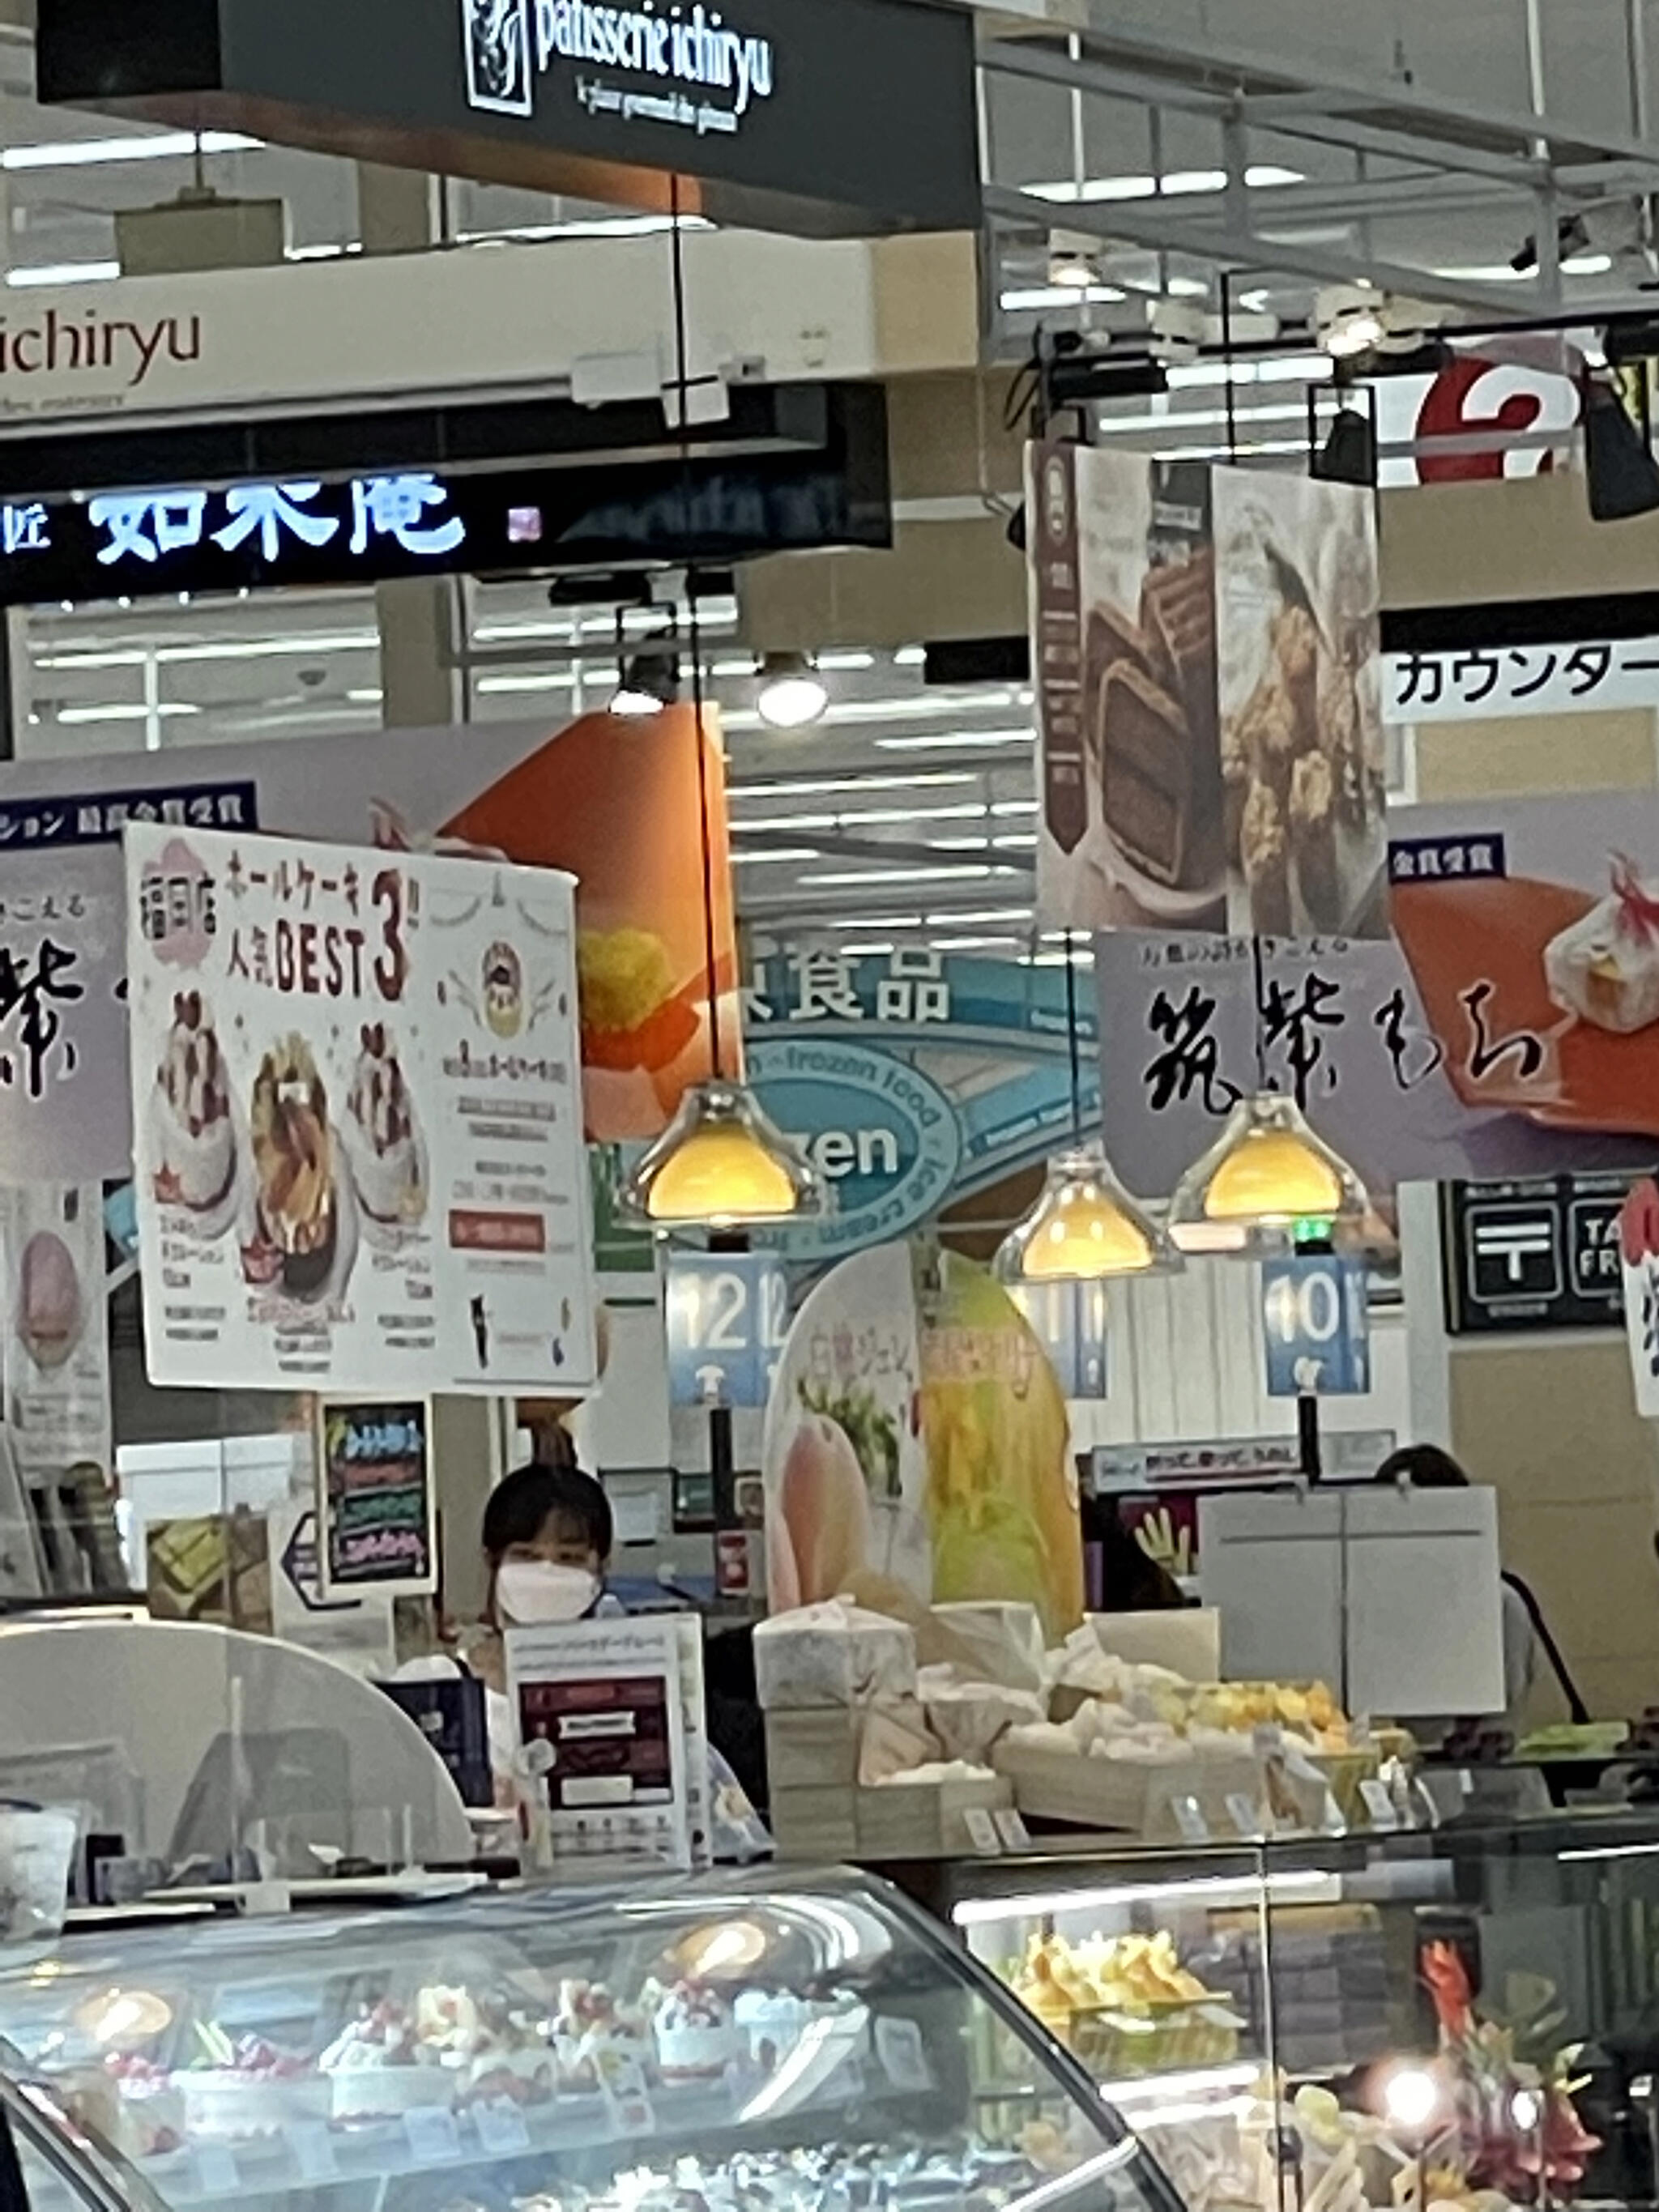 ichiryu イオン福岡店の代表写真5